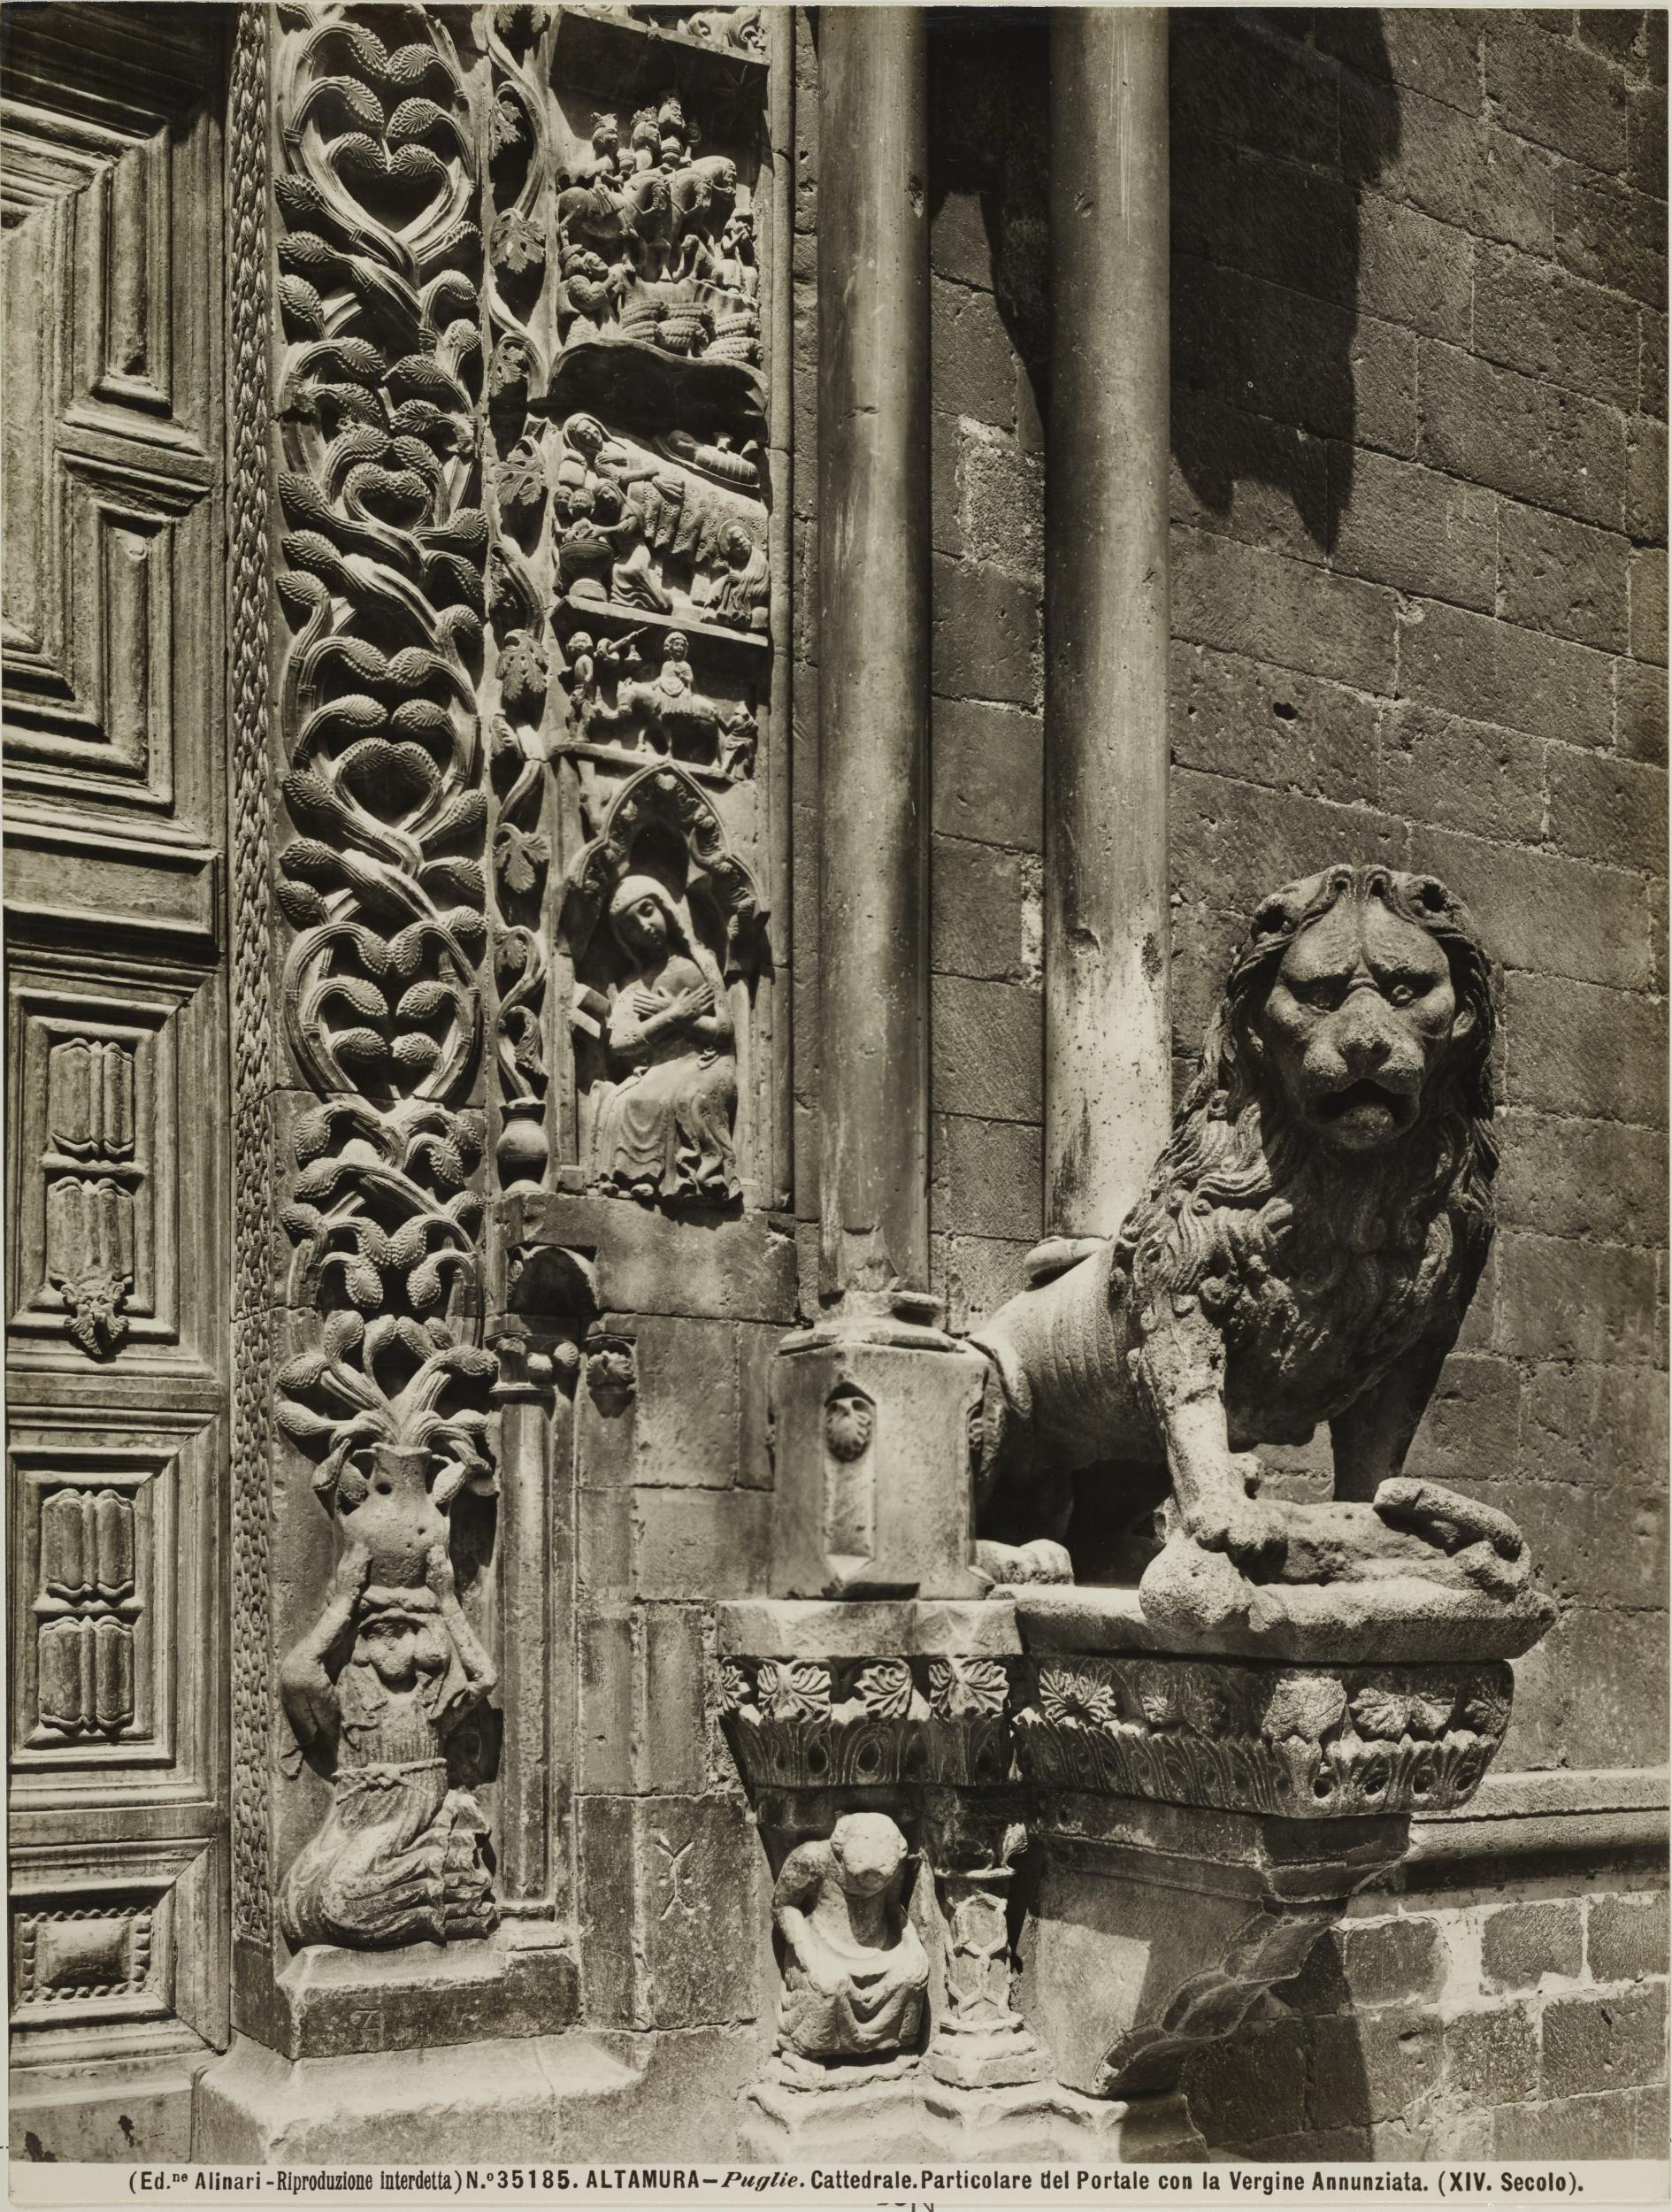 Fratelli Alinari, Altamura - Cattedrale di S. Maria Assunta, portale,particolare, 1951-2000, gelatina ai sali d'argento/carta, MPI130833